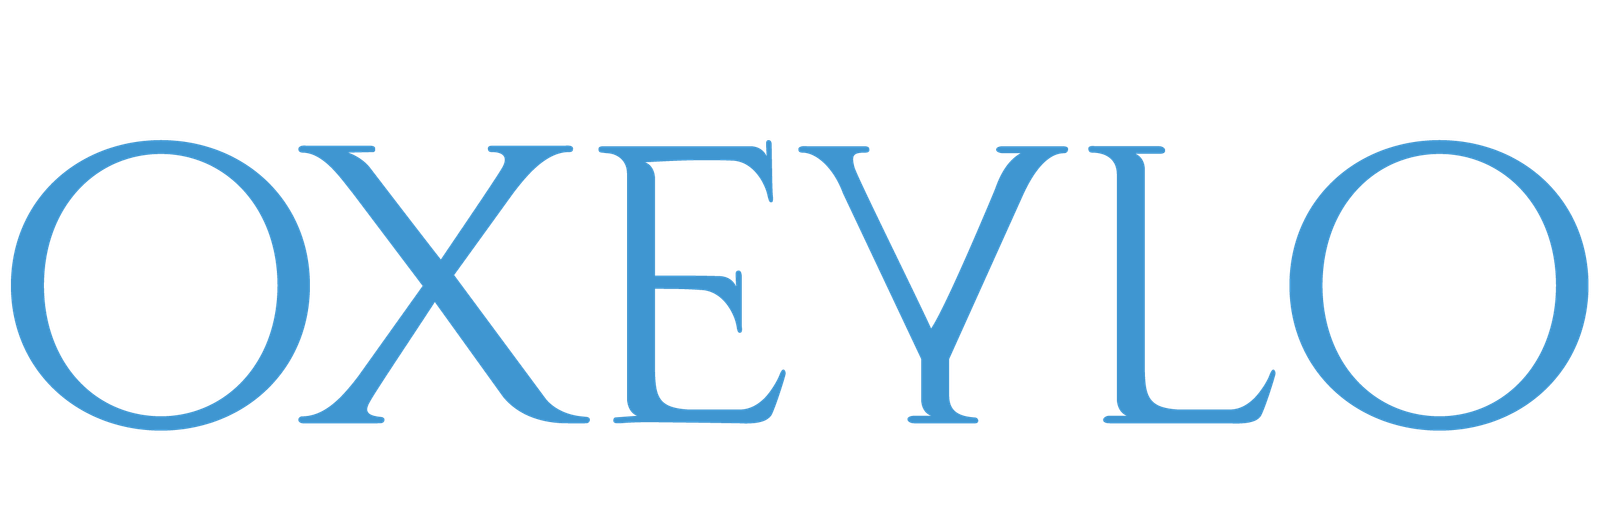 Oxeylo_blue_logo